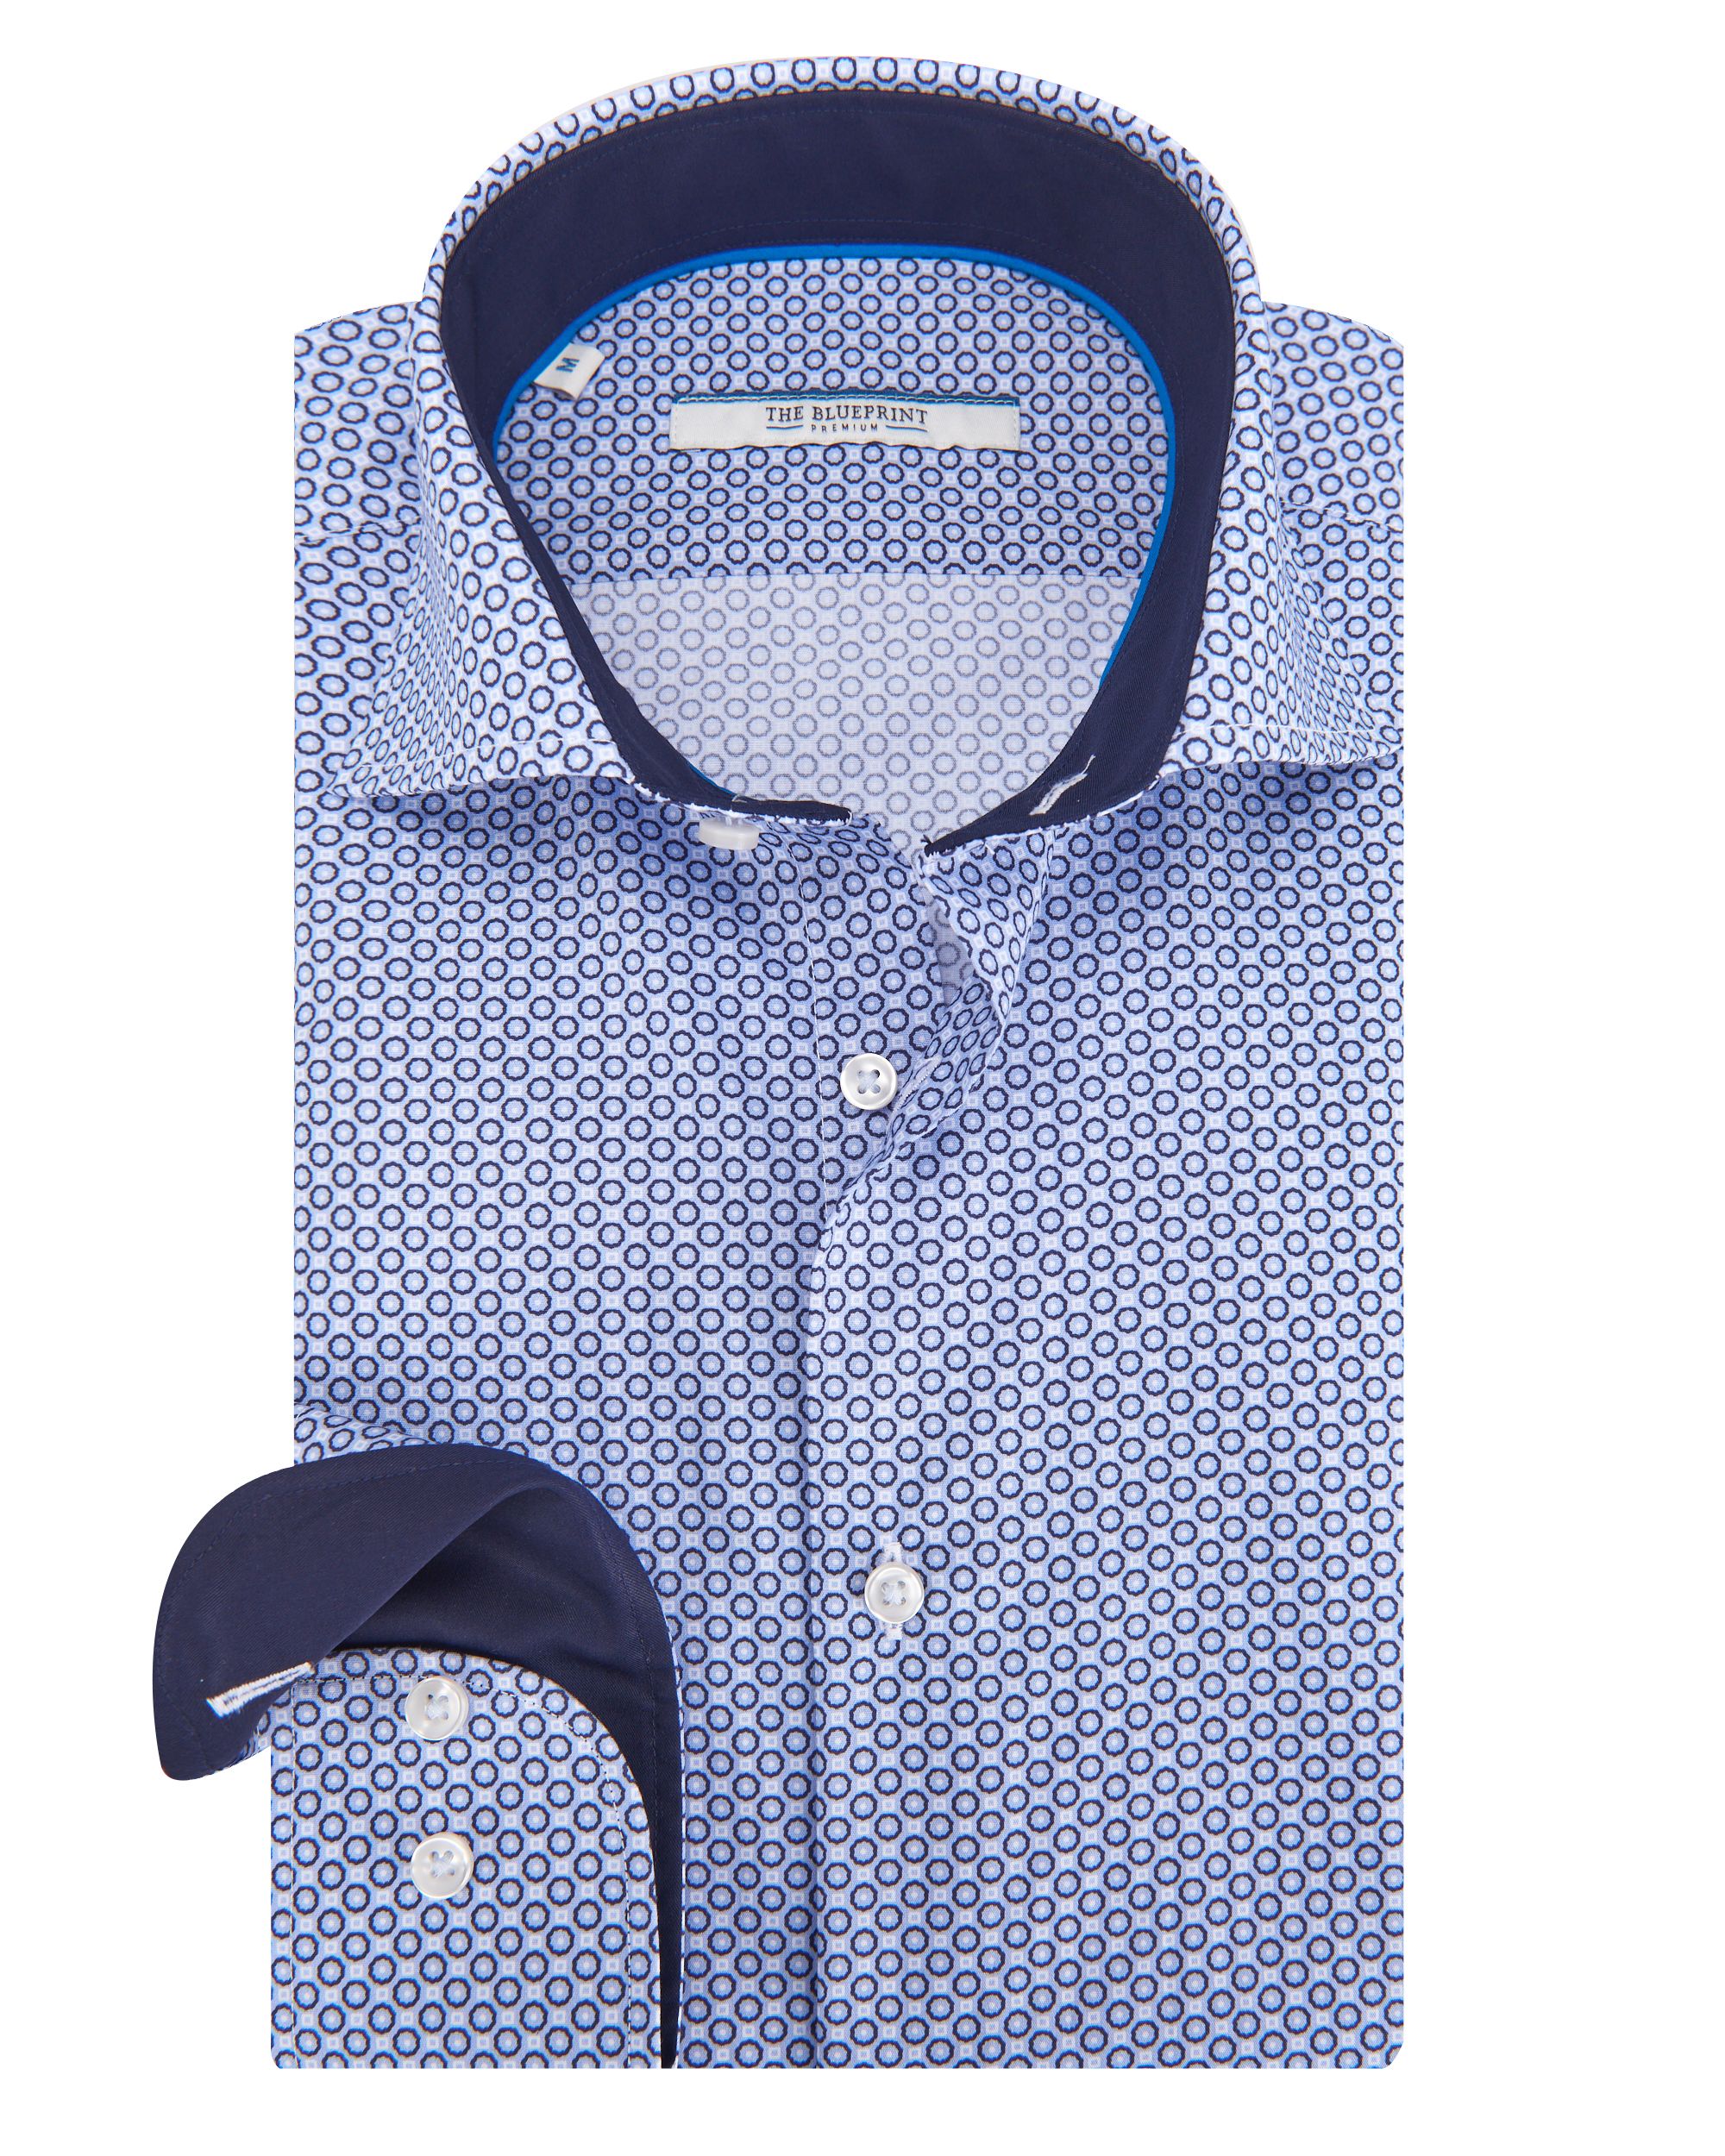 The BLUEPRINT Premium Trendy overhemd LM Blauw dessin 084482-001-L